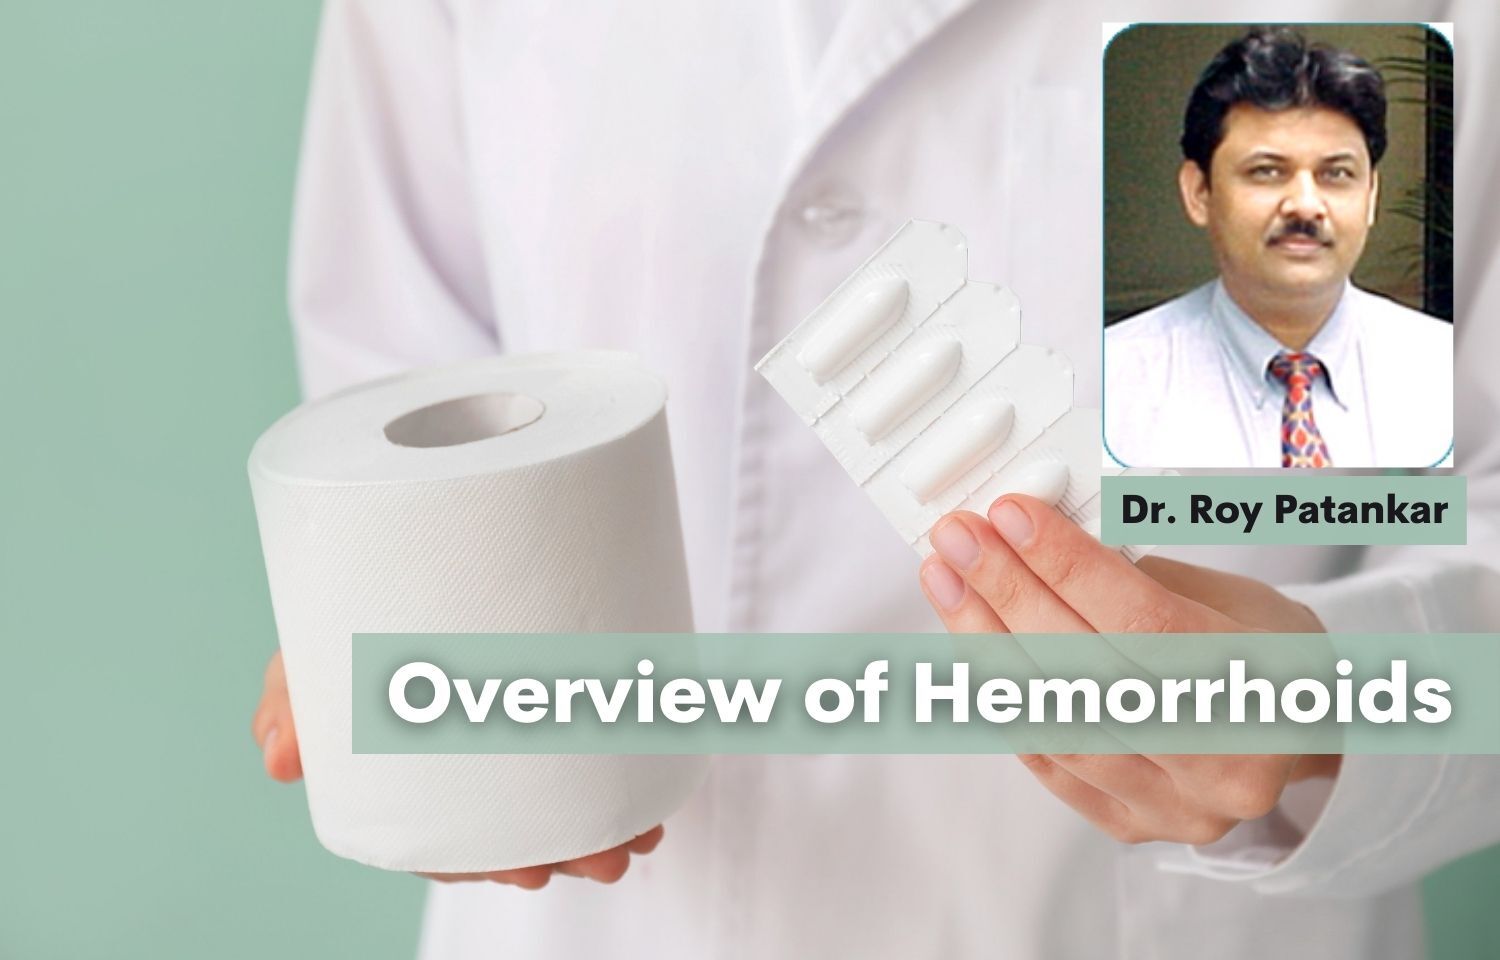 hemorrhoids case presentation slideshare